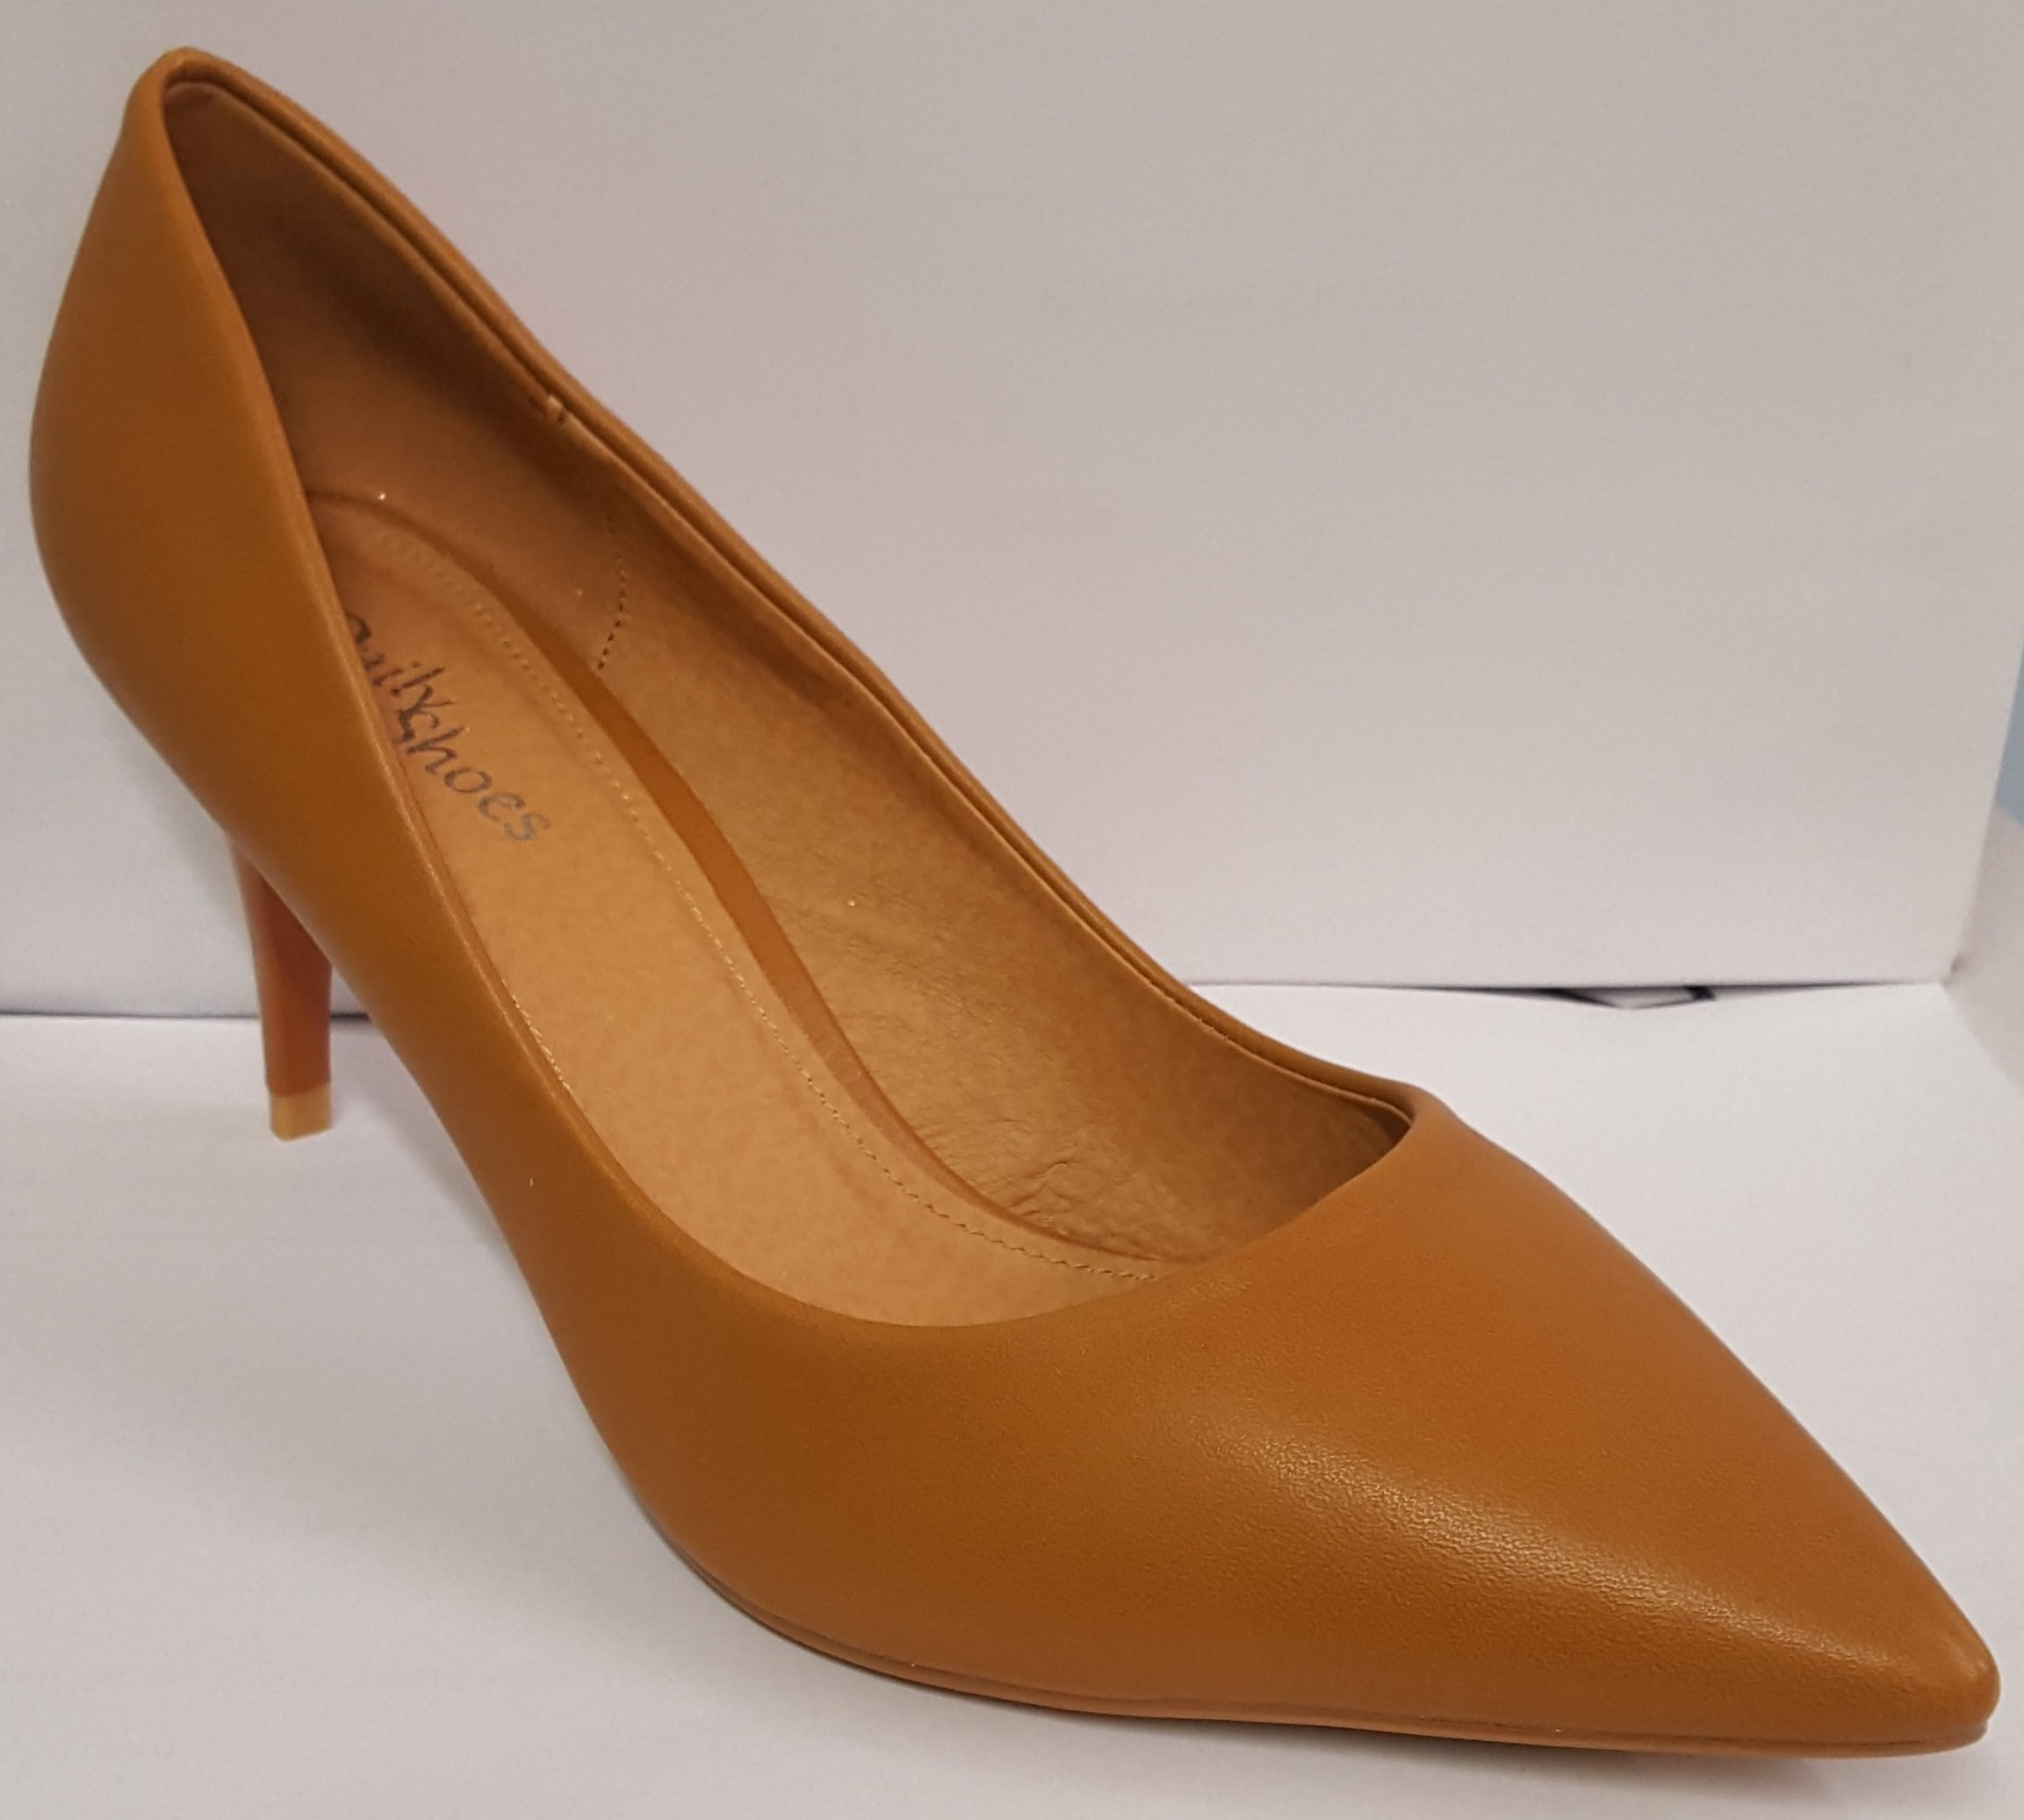 Details about   hot sale women's high heels stiletto round toe lace pumps wedding shoes big size